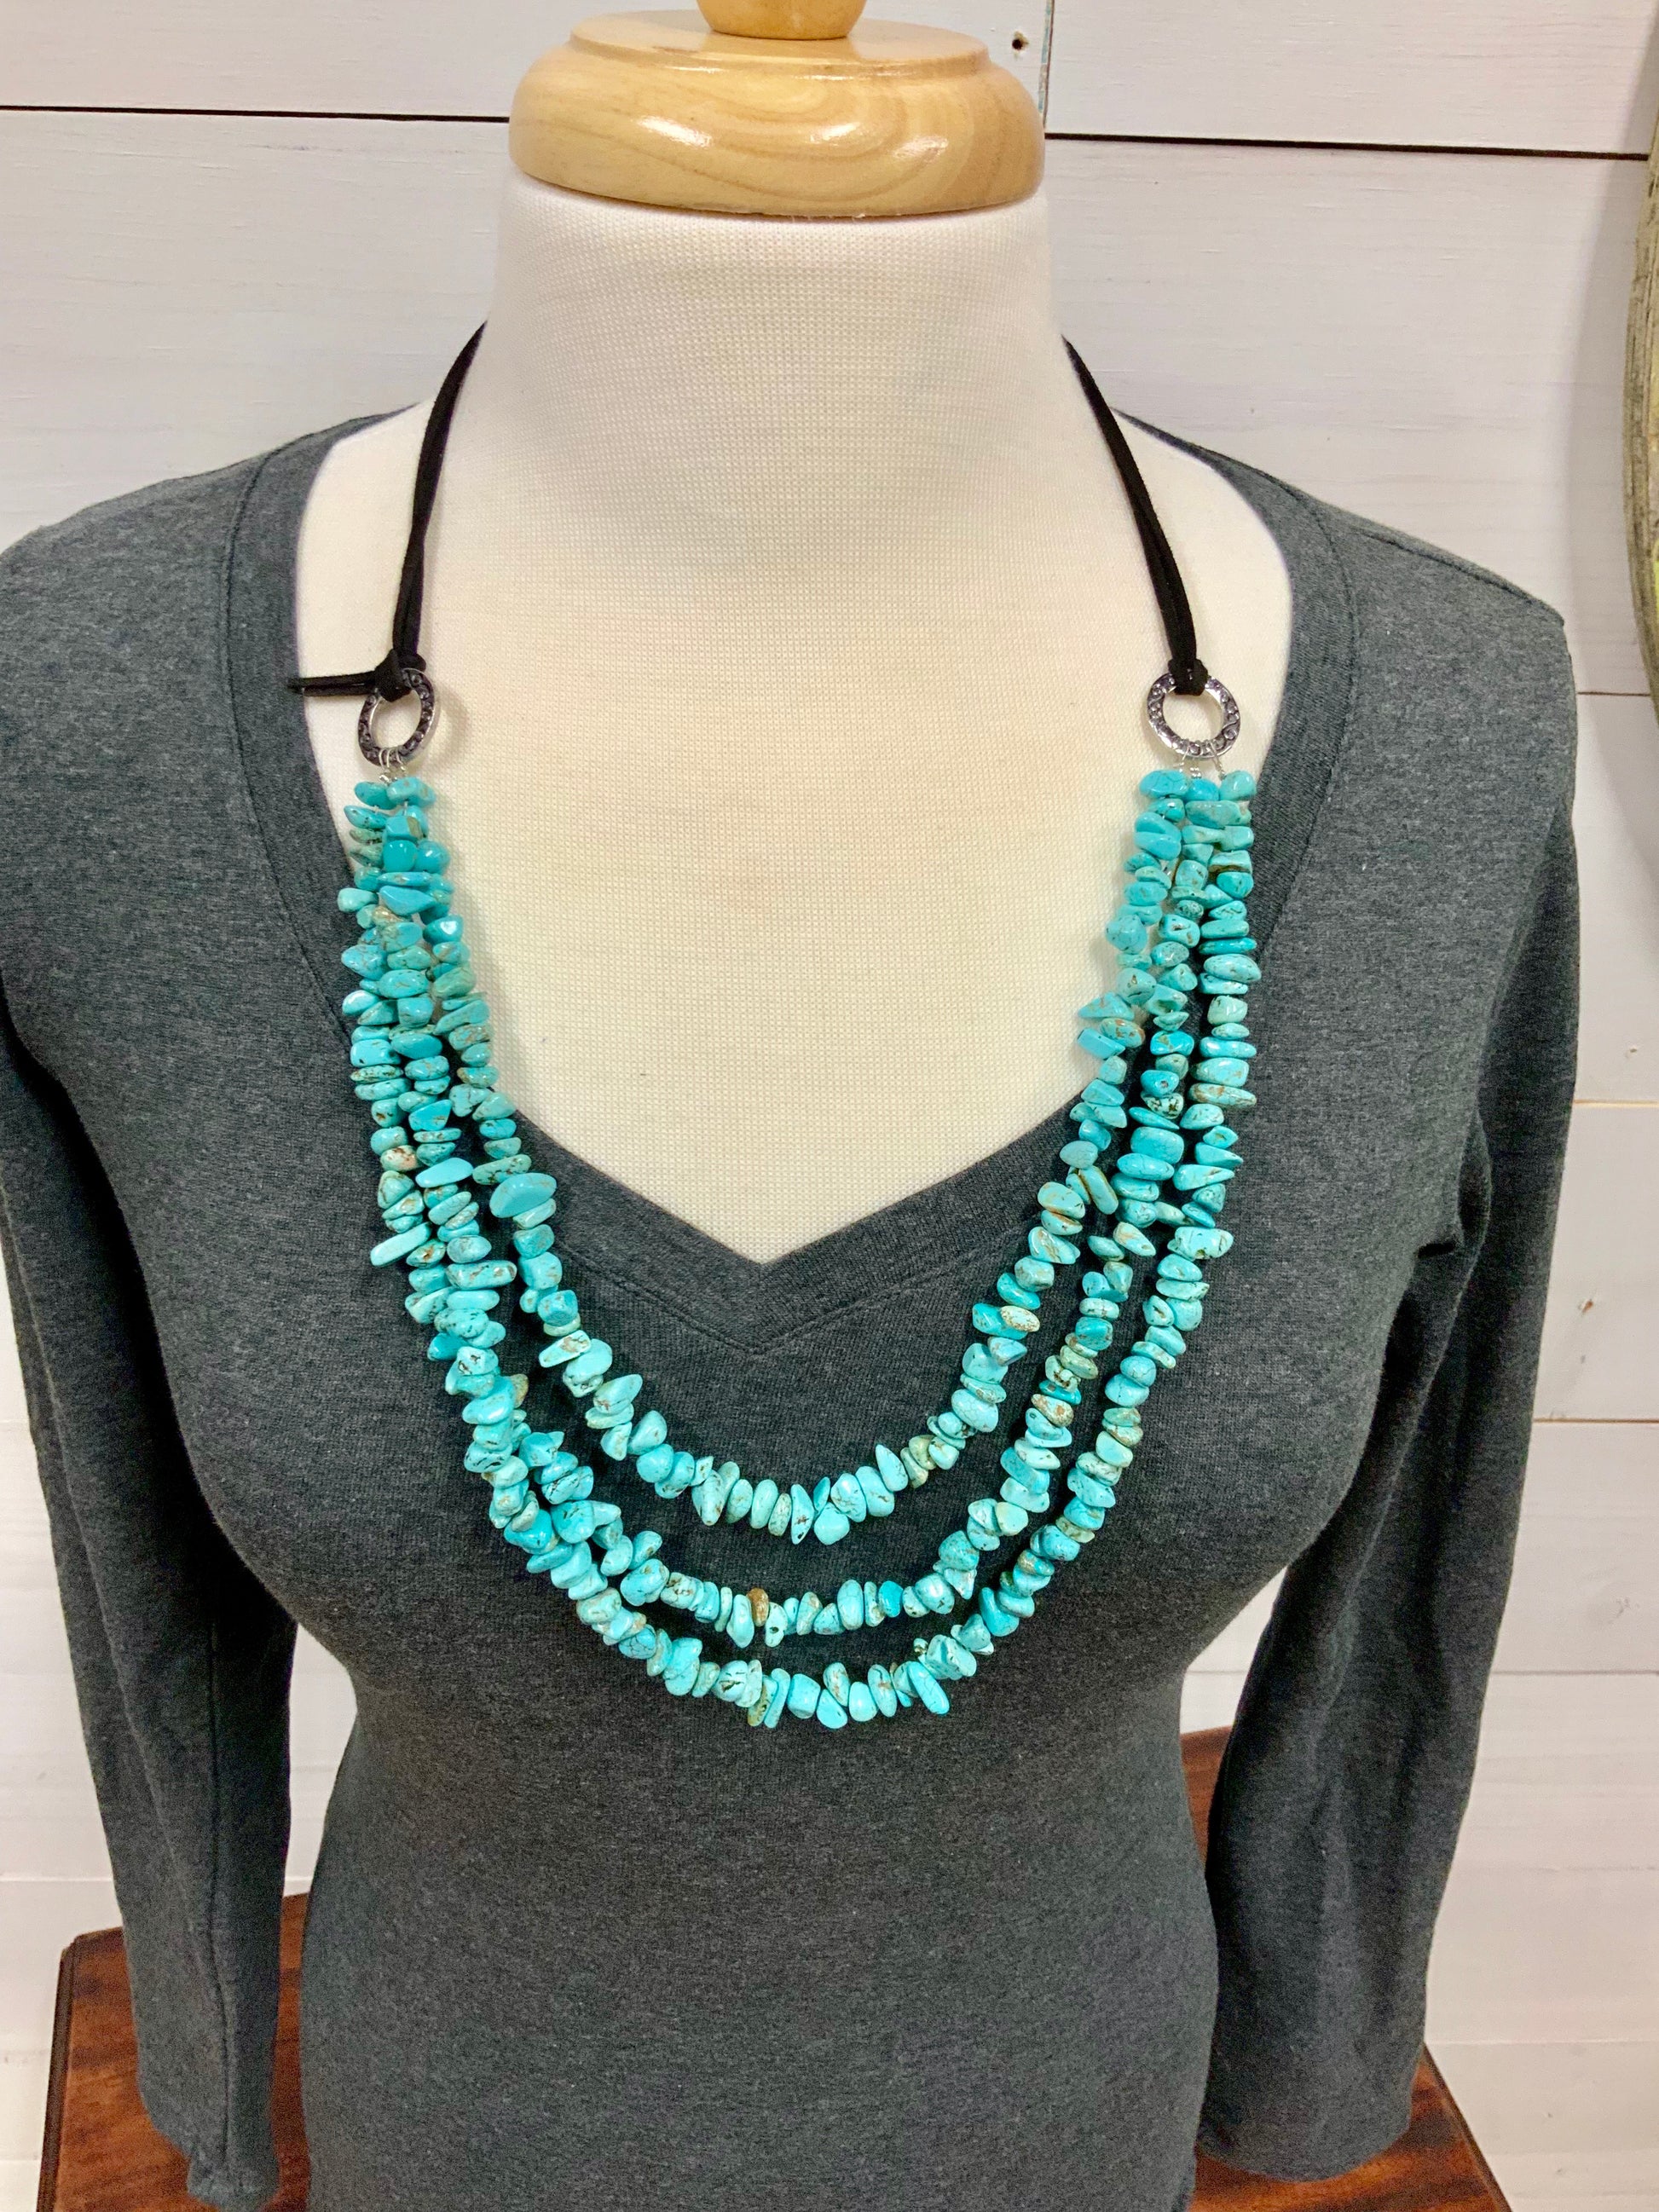 Triple strand turquoise necklace - The Desert Paintbrush